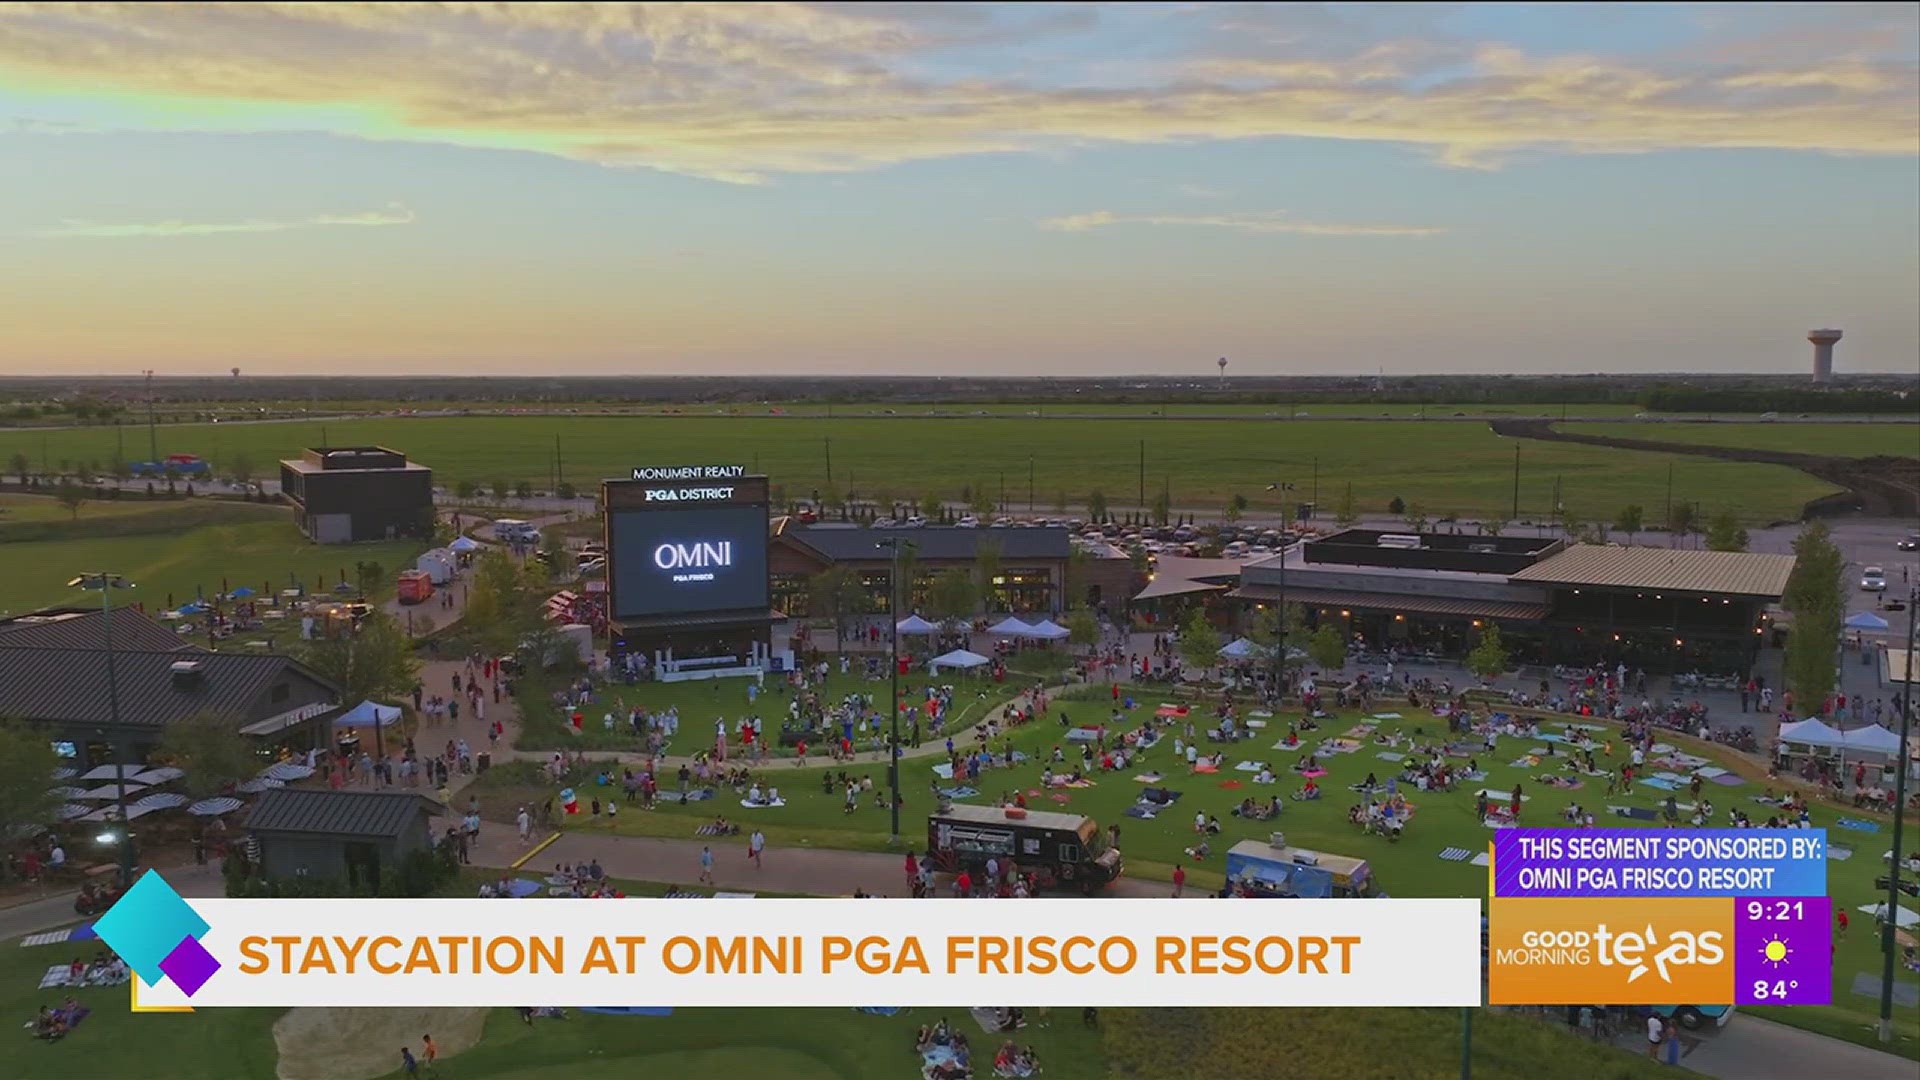 This segment is sponsored by: OMNI PGA Frisco